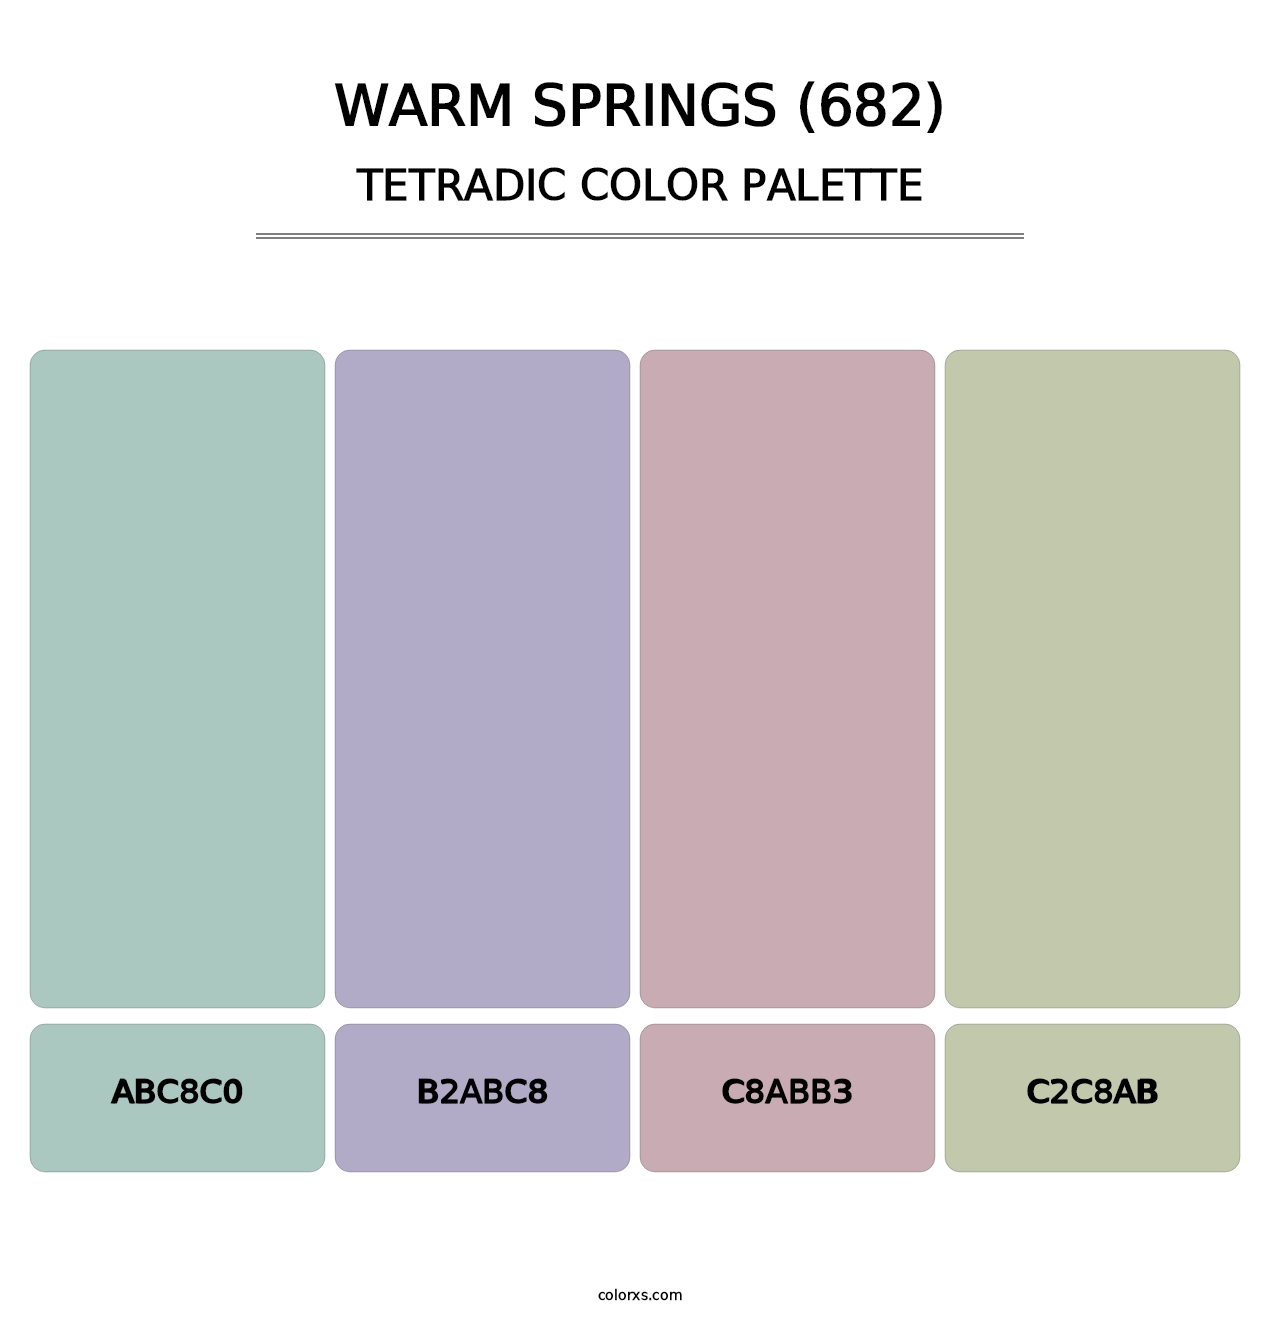 Warm Springs (682) - Tetradic Color Palette